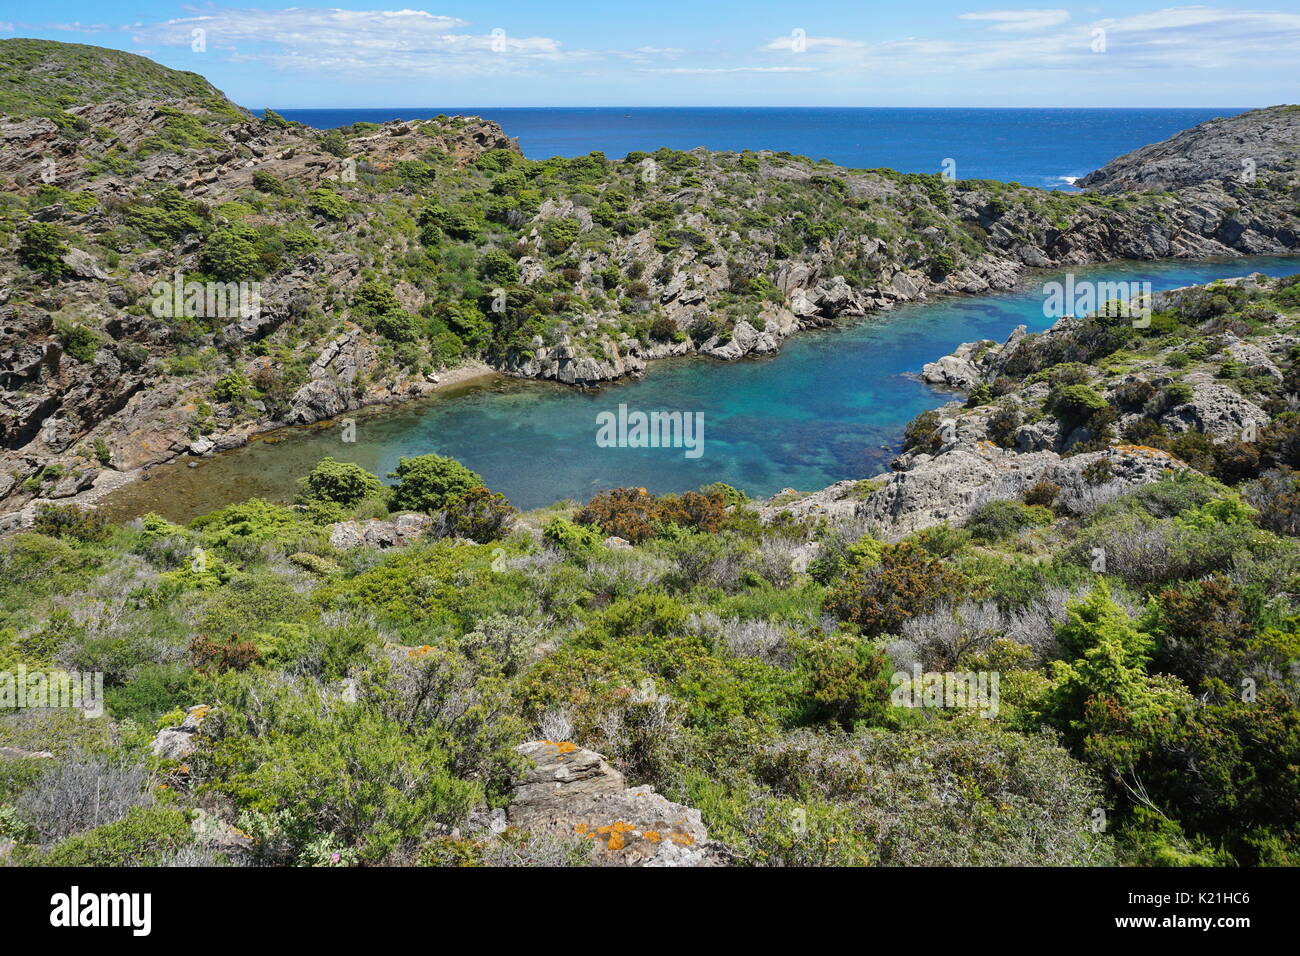 Spain coastal landscape small cove with clear water, Mediterranean sea, Cala Bona in the Cap de Creus natural park, Costa Brava, Cadaques, Catalonia Stock Photo